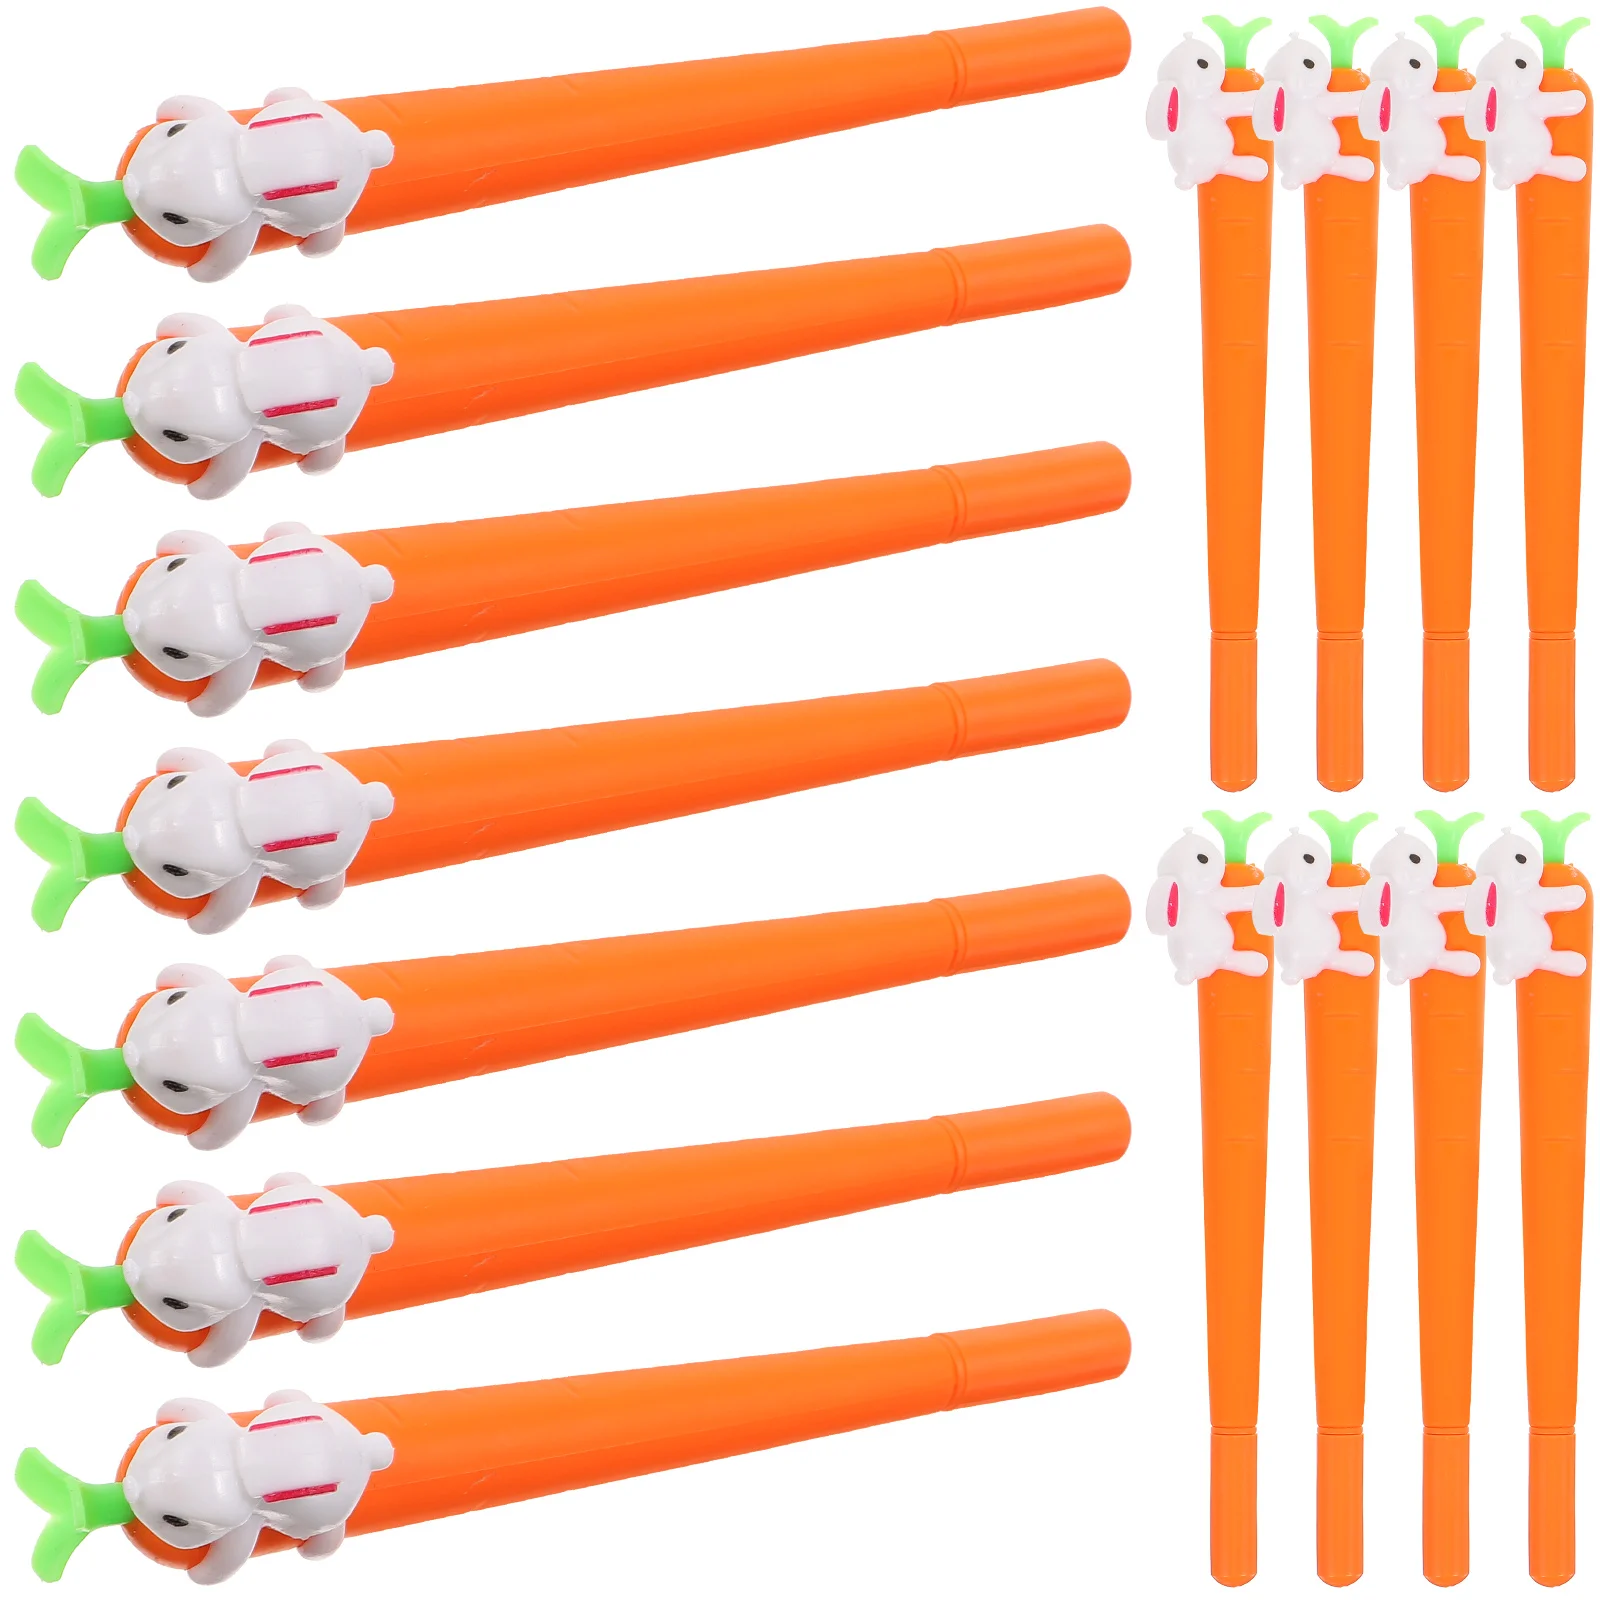 

15 Pcs Carrot Pen Carrots Rabbit Pattern Stationery Gel Writing Silica Ink Shape Fountain Pen Student 05mm